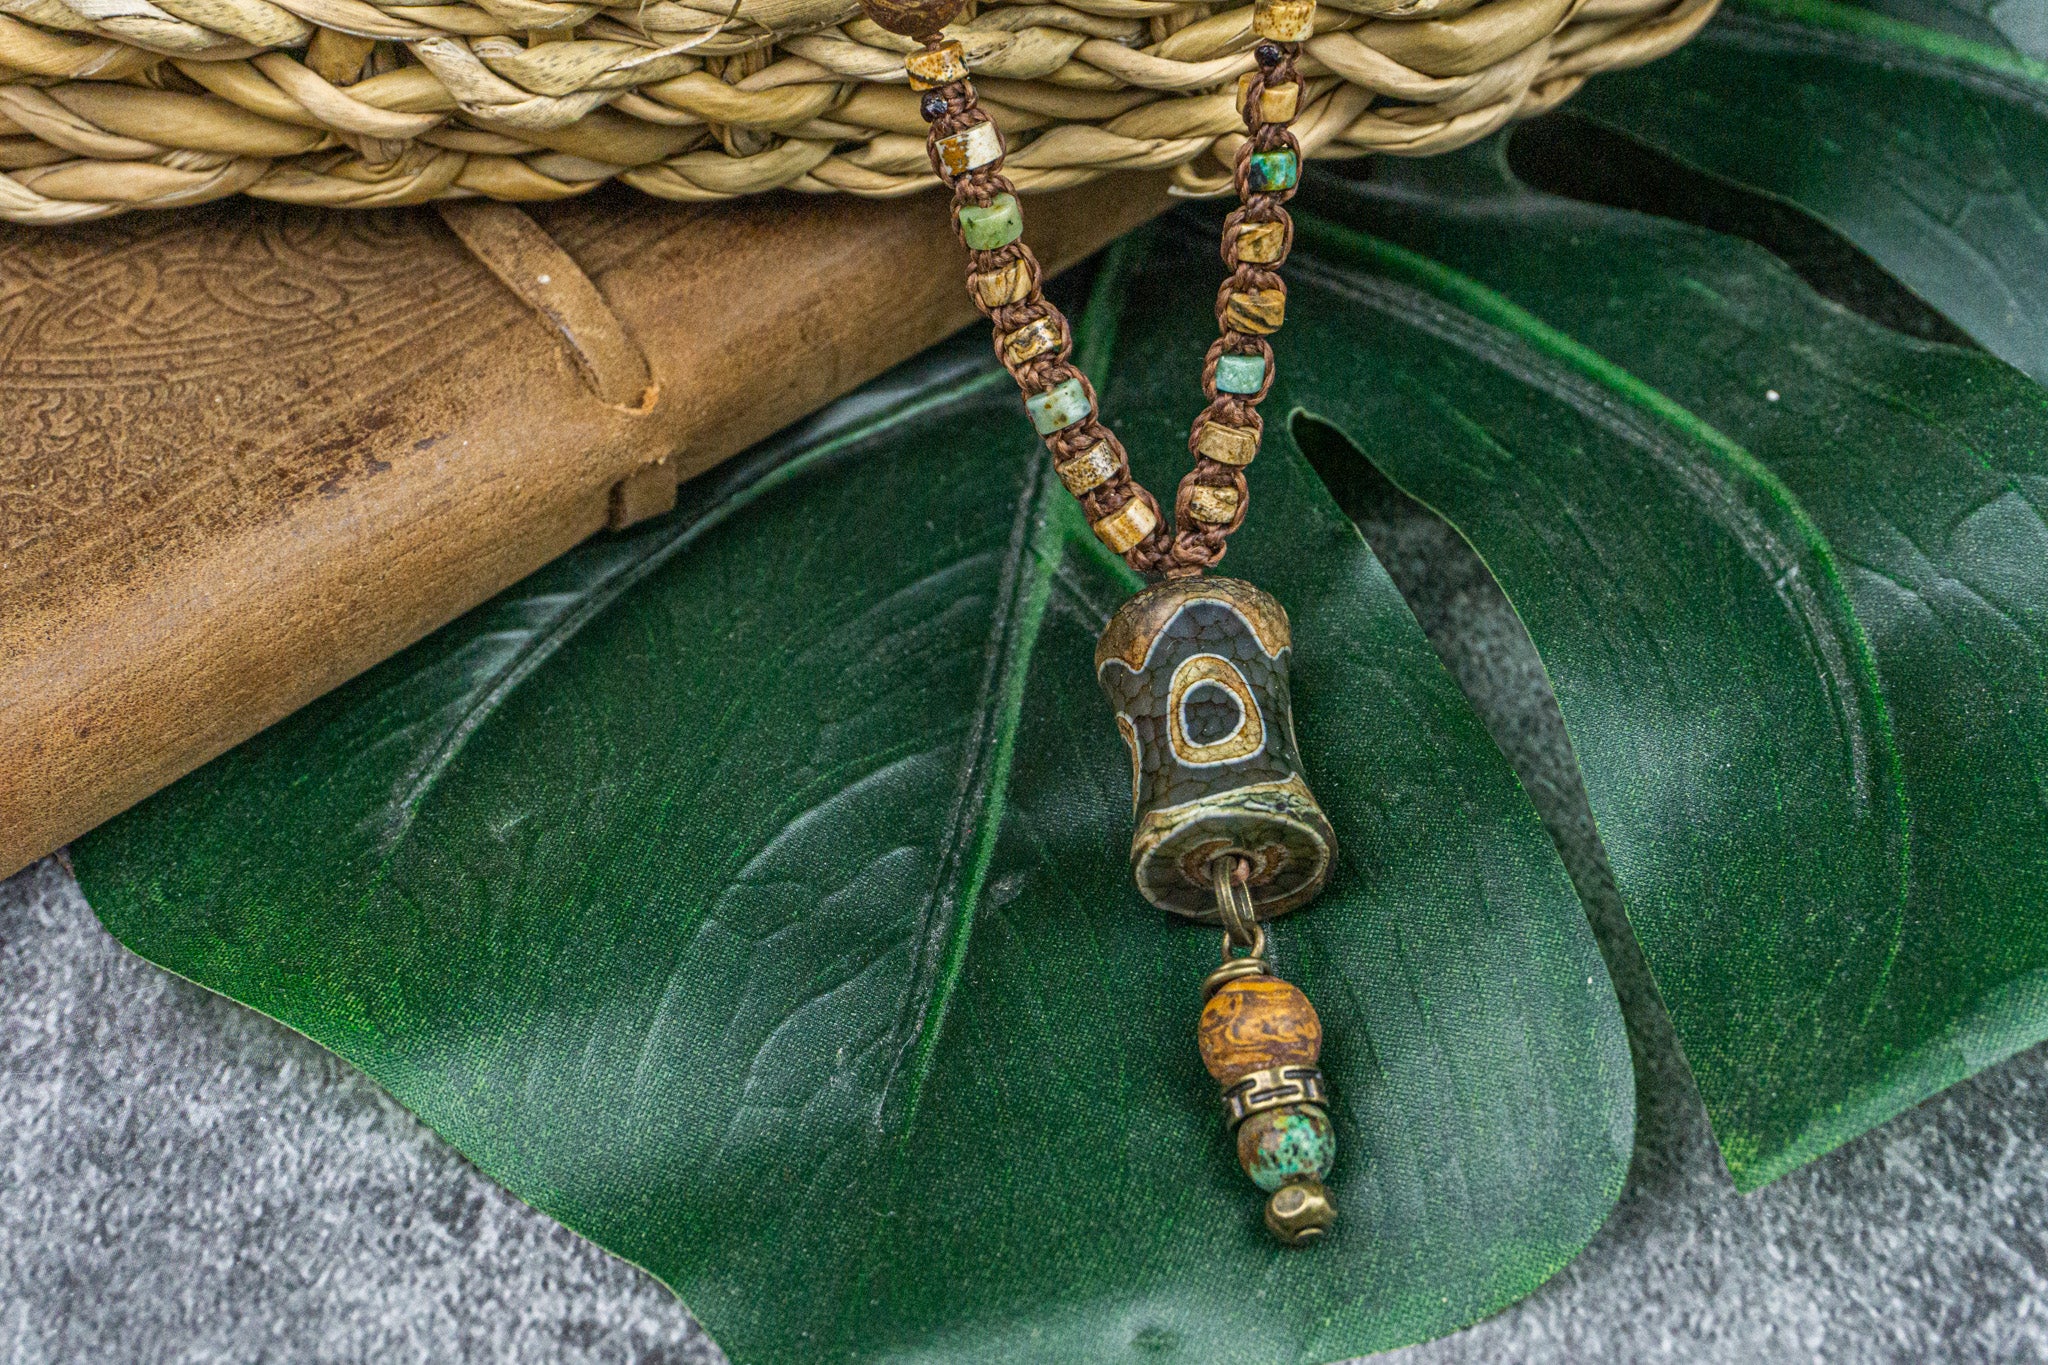 necklace made of jade, jasper and a third eye tibetan pendant- wander jewellery